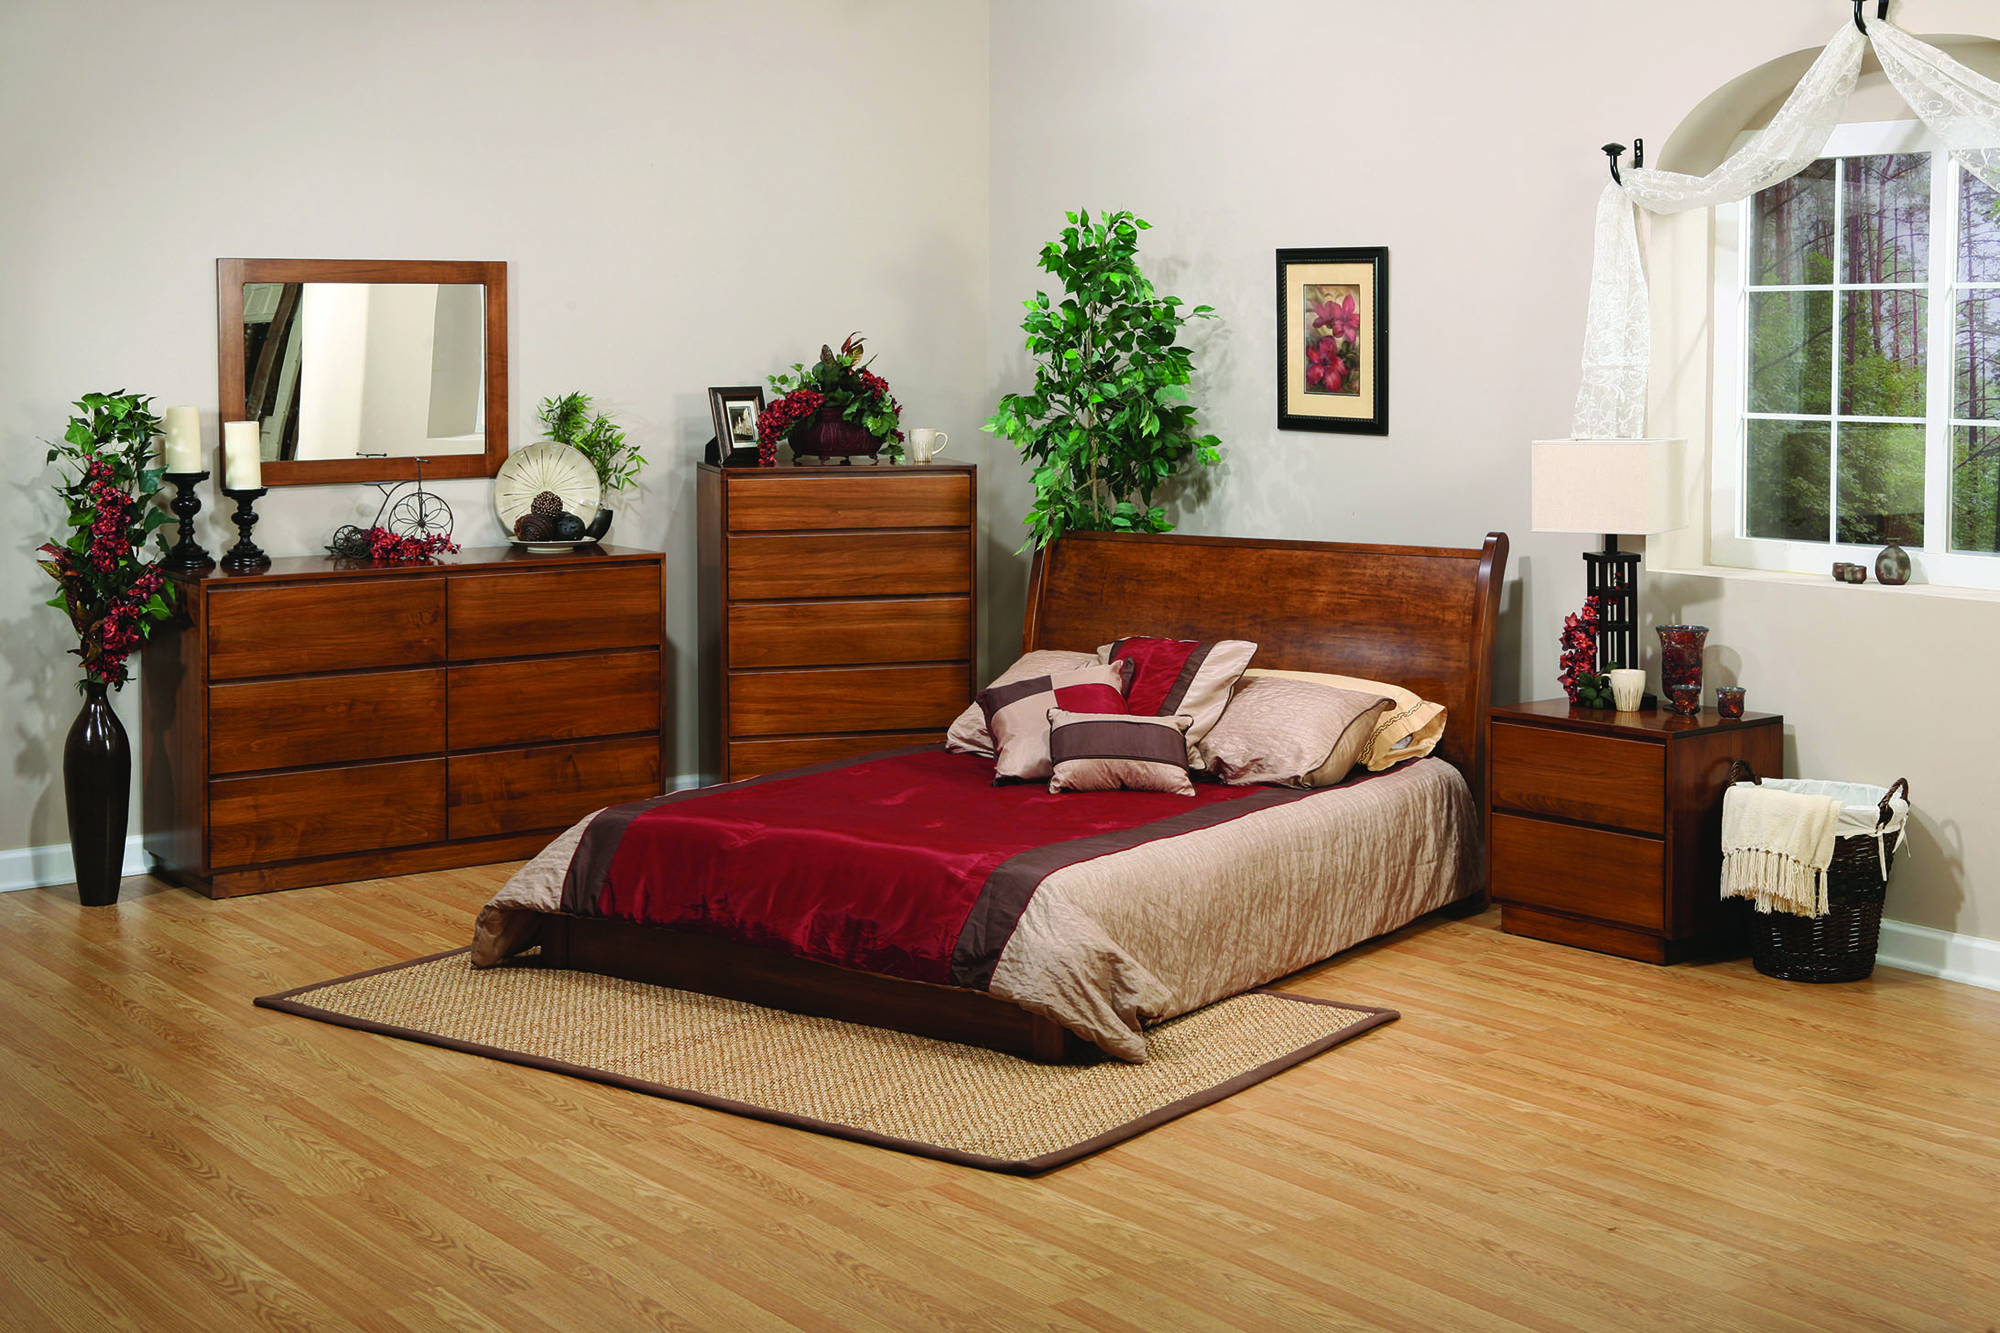 canterbury bedroom furniture ebay